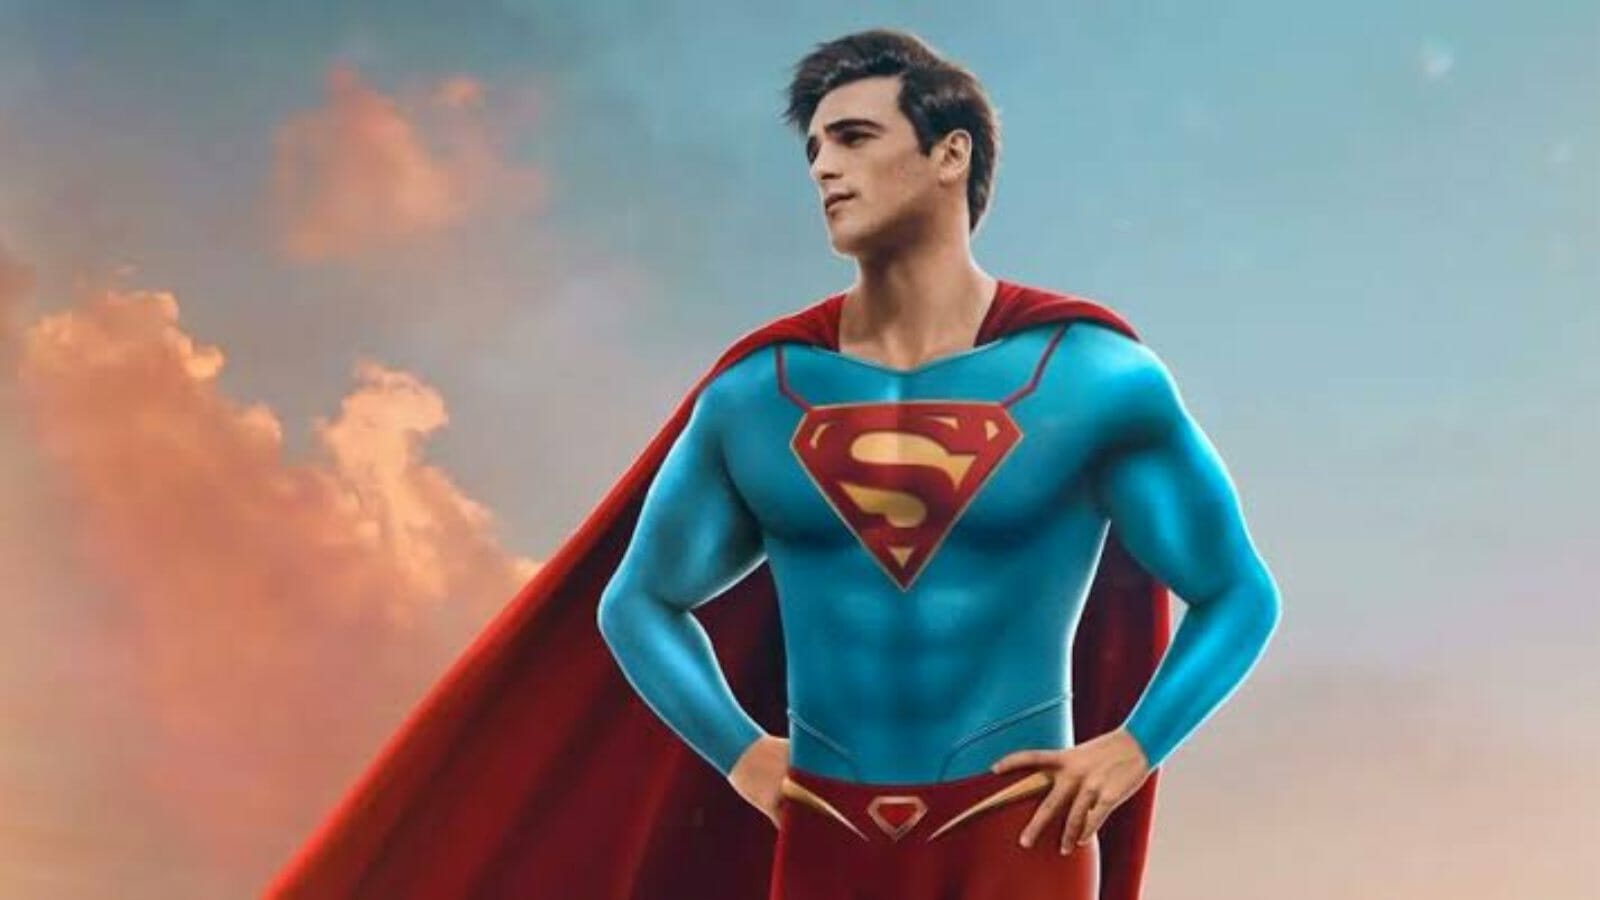 Jacob Elordi as Superman